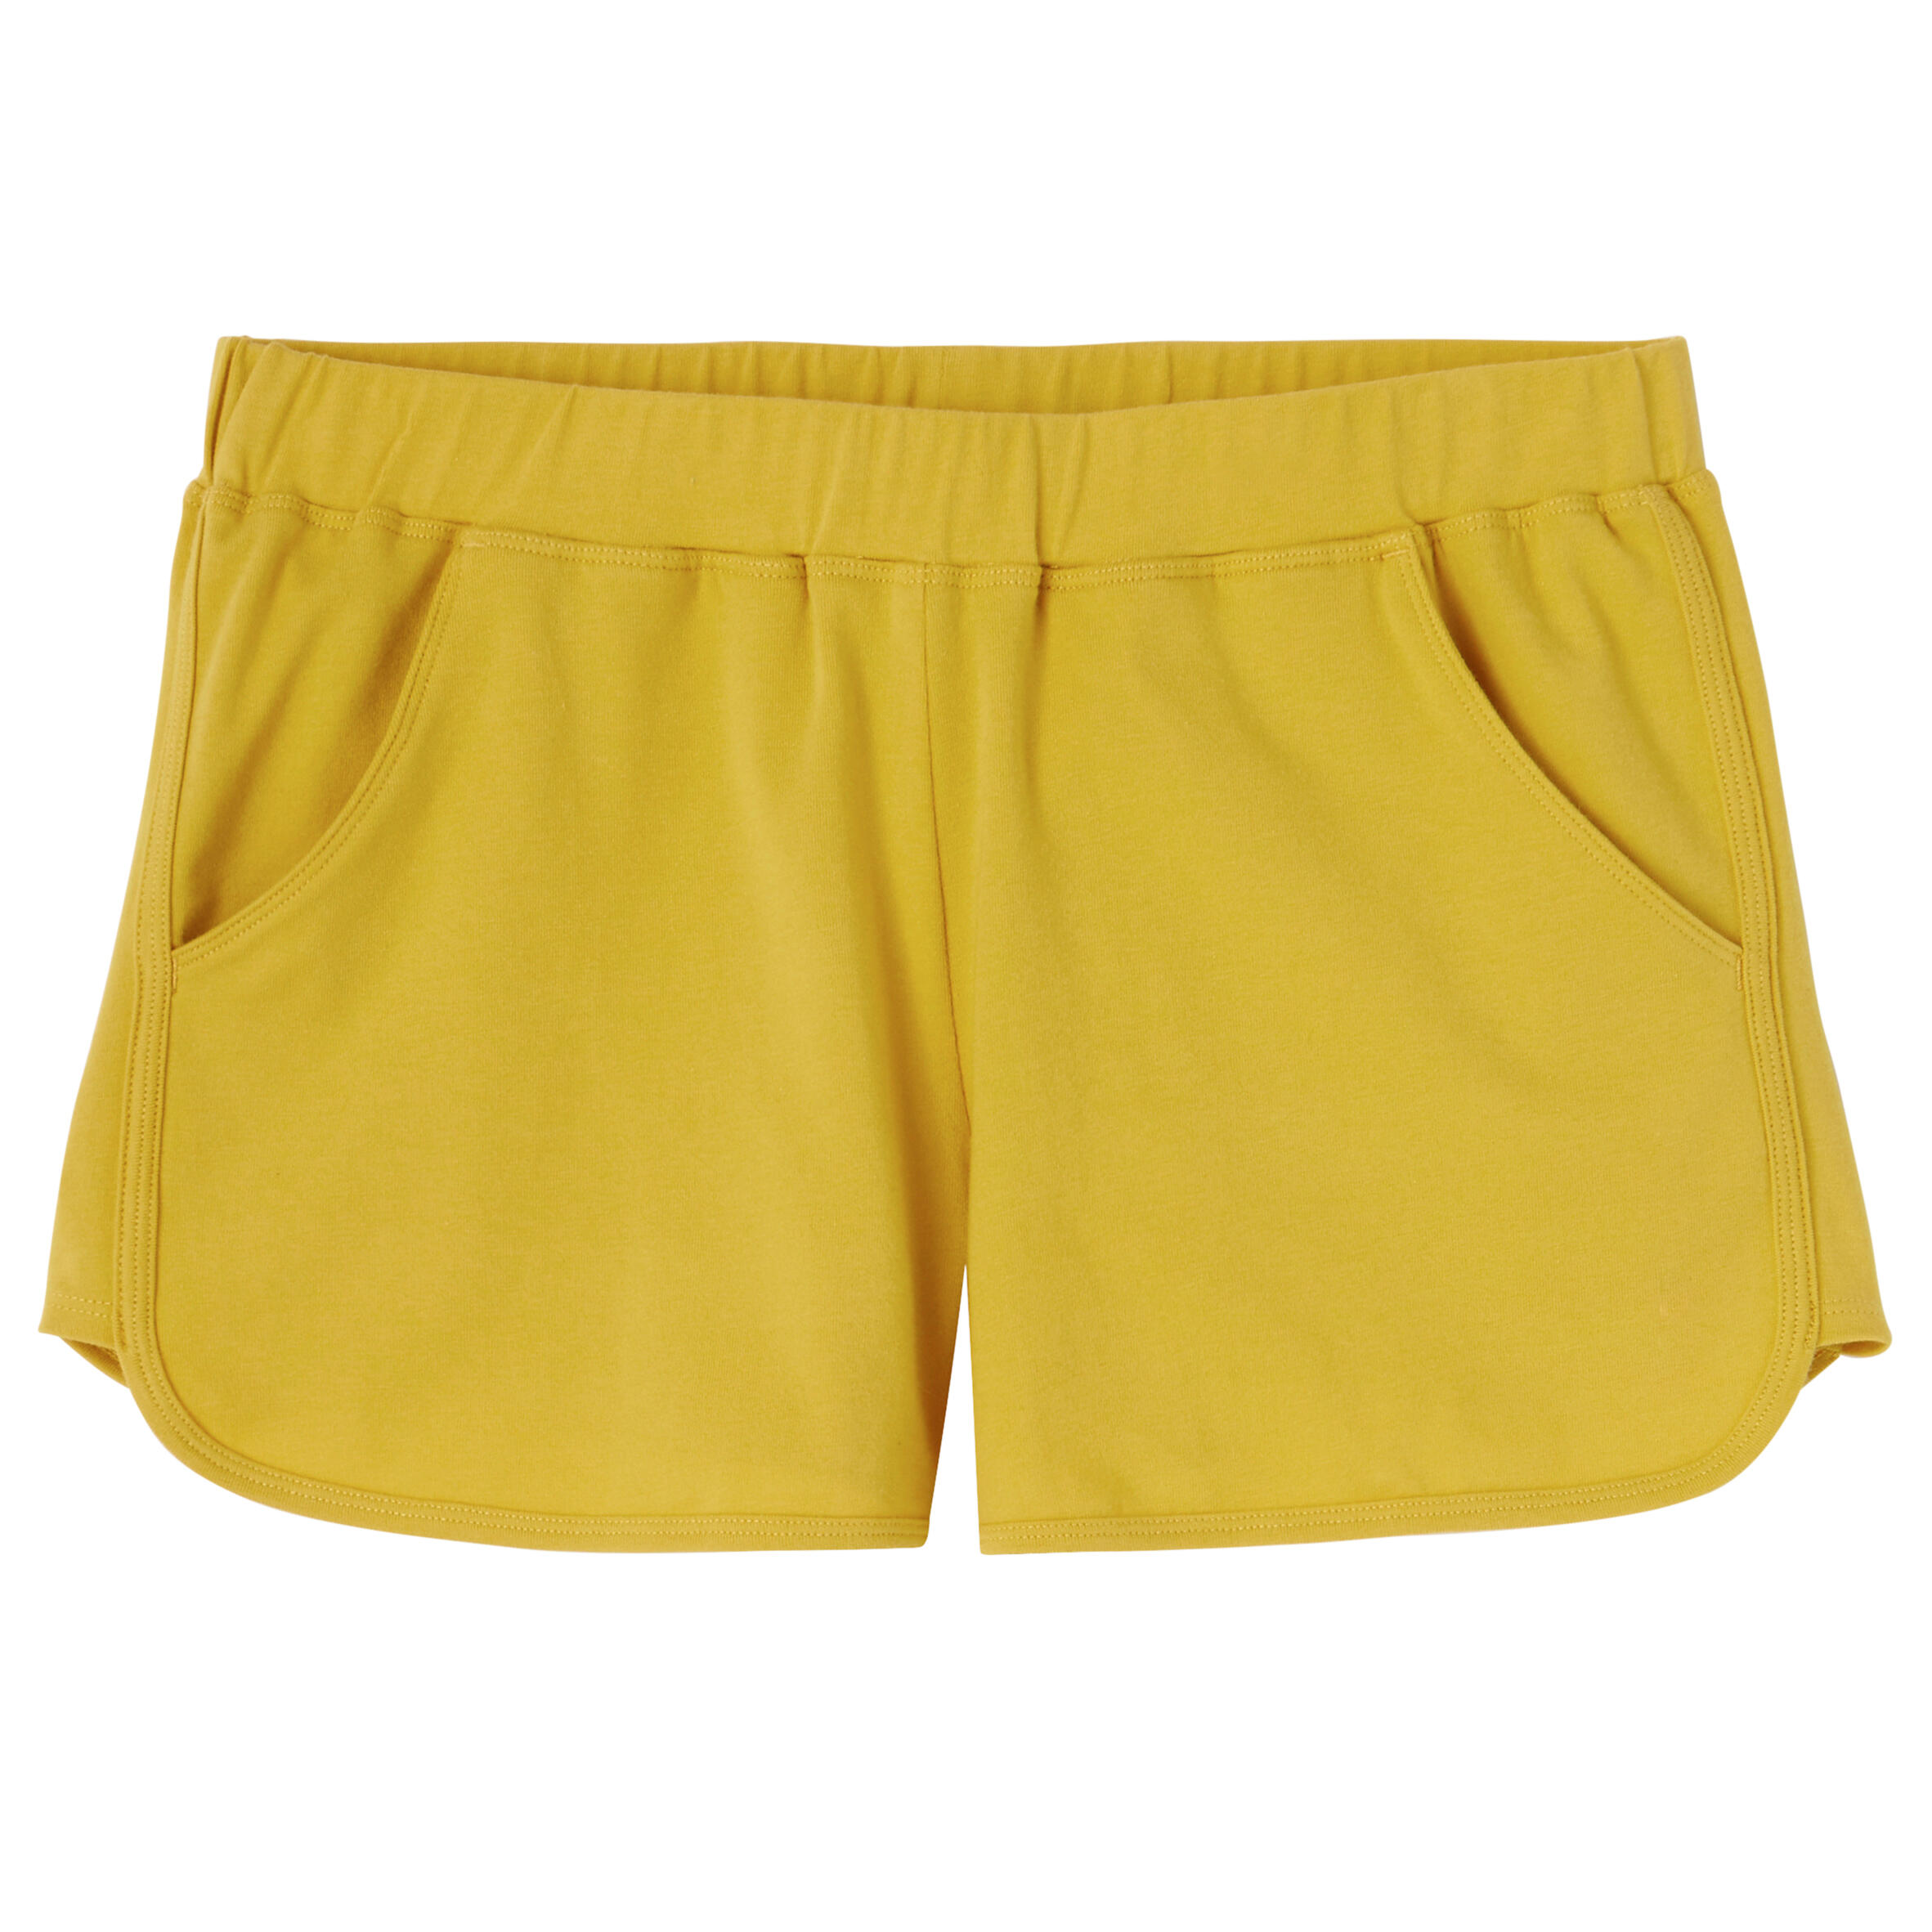 Women's Straight-Leg Cotton Fitness Shorts 520 With Pocket - Yellow 5/6